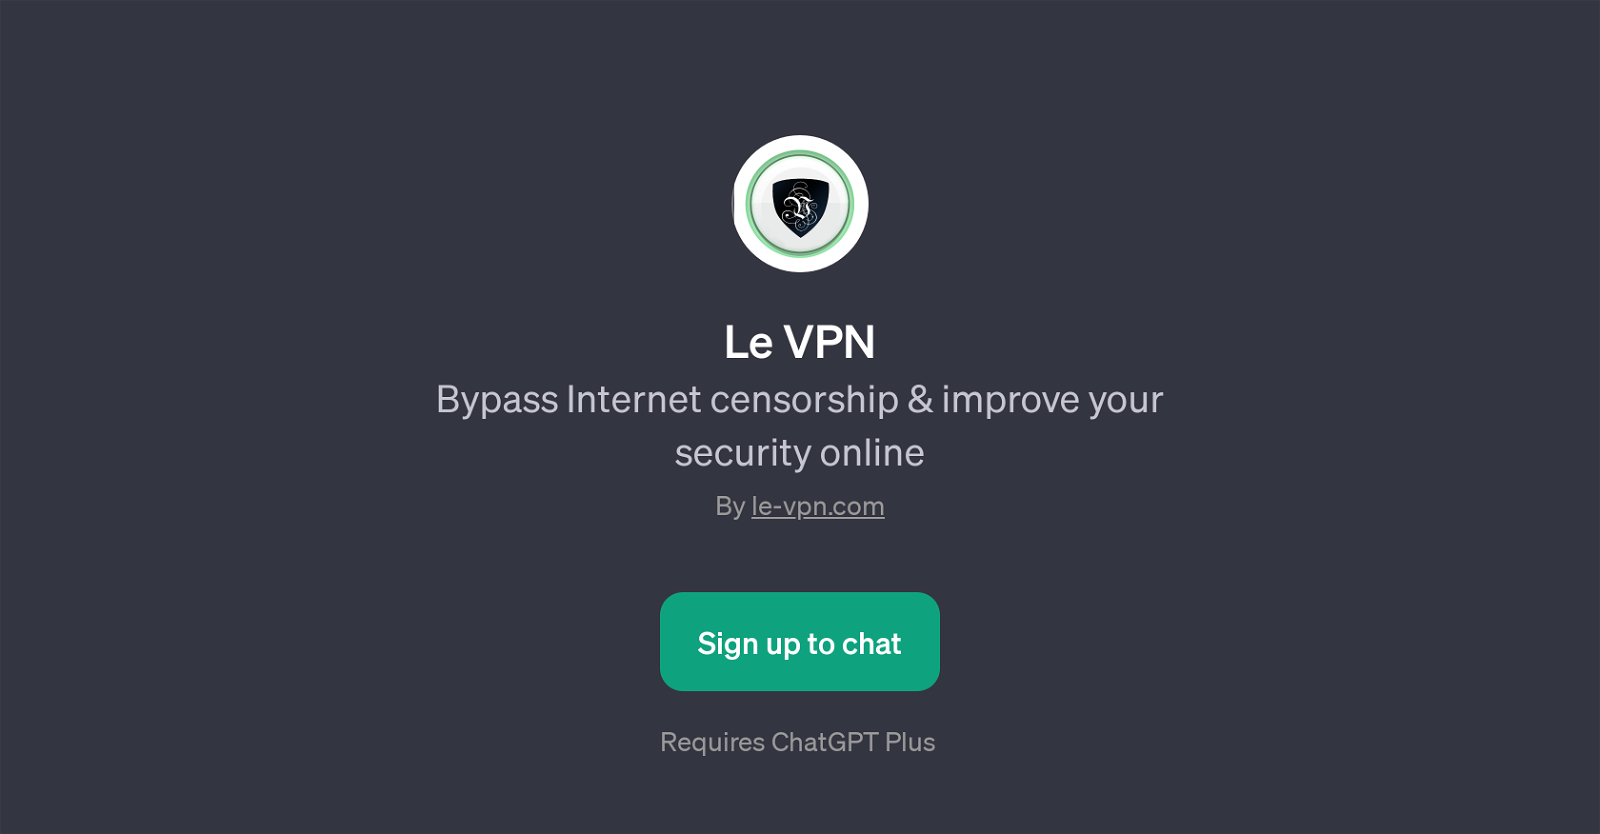 Le VPN website